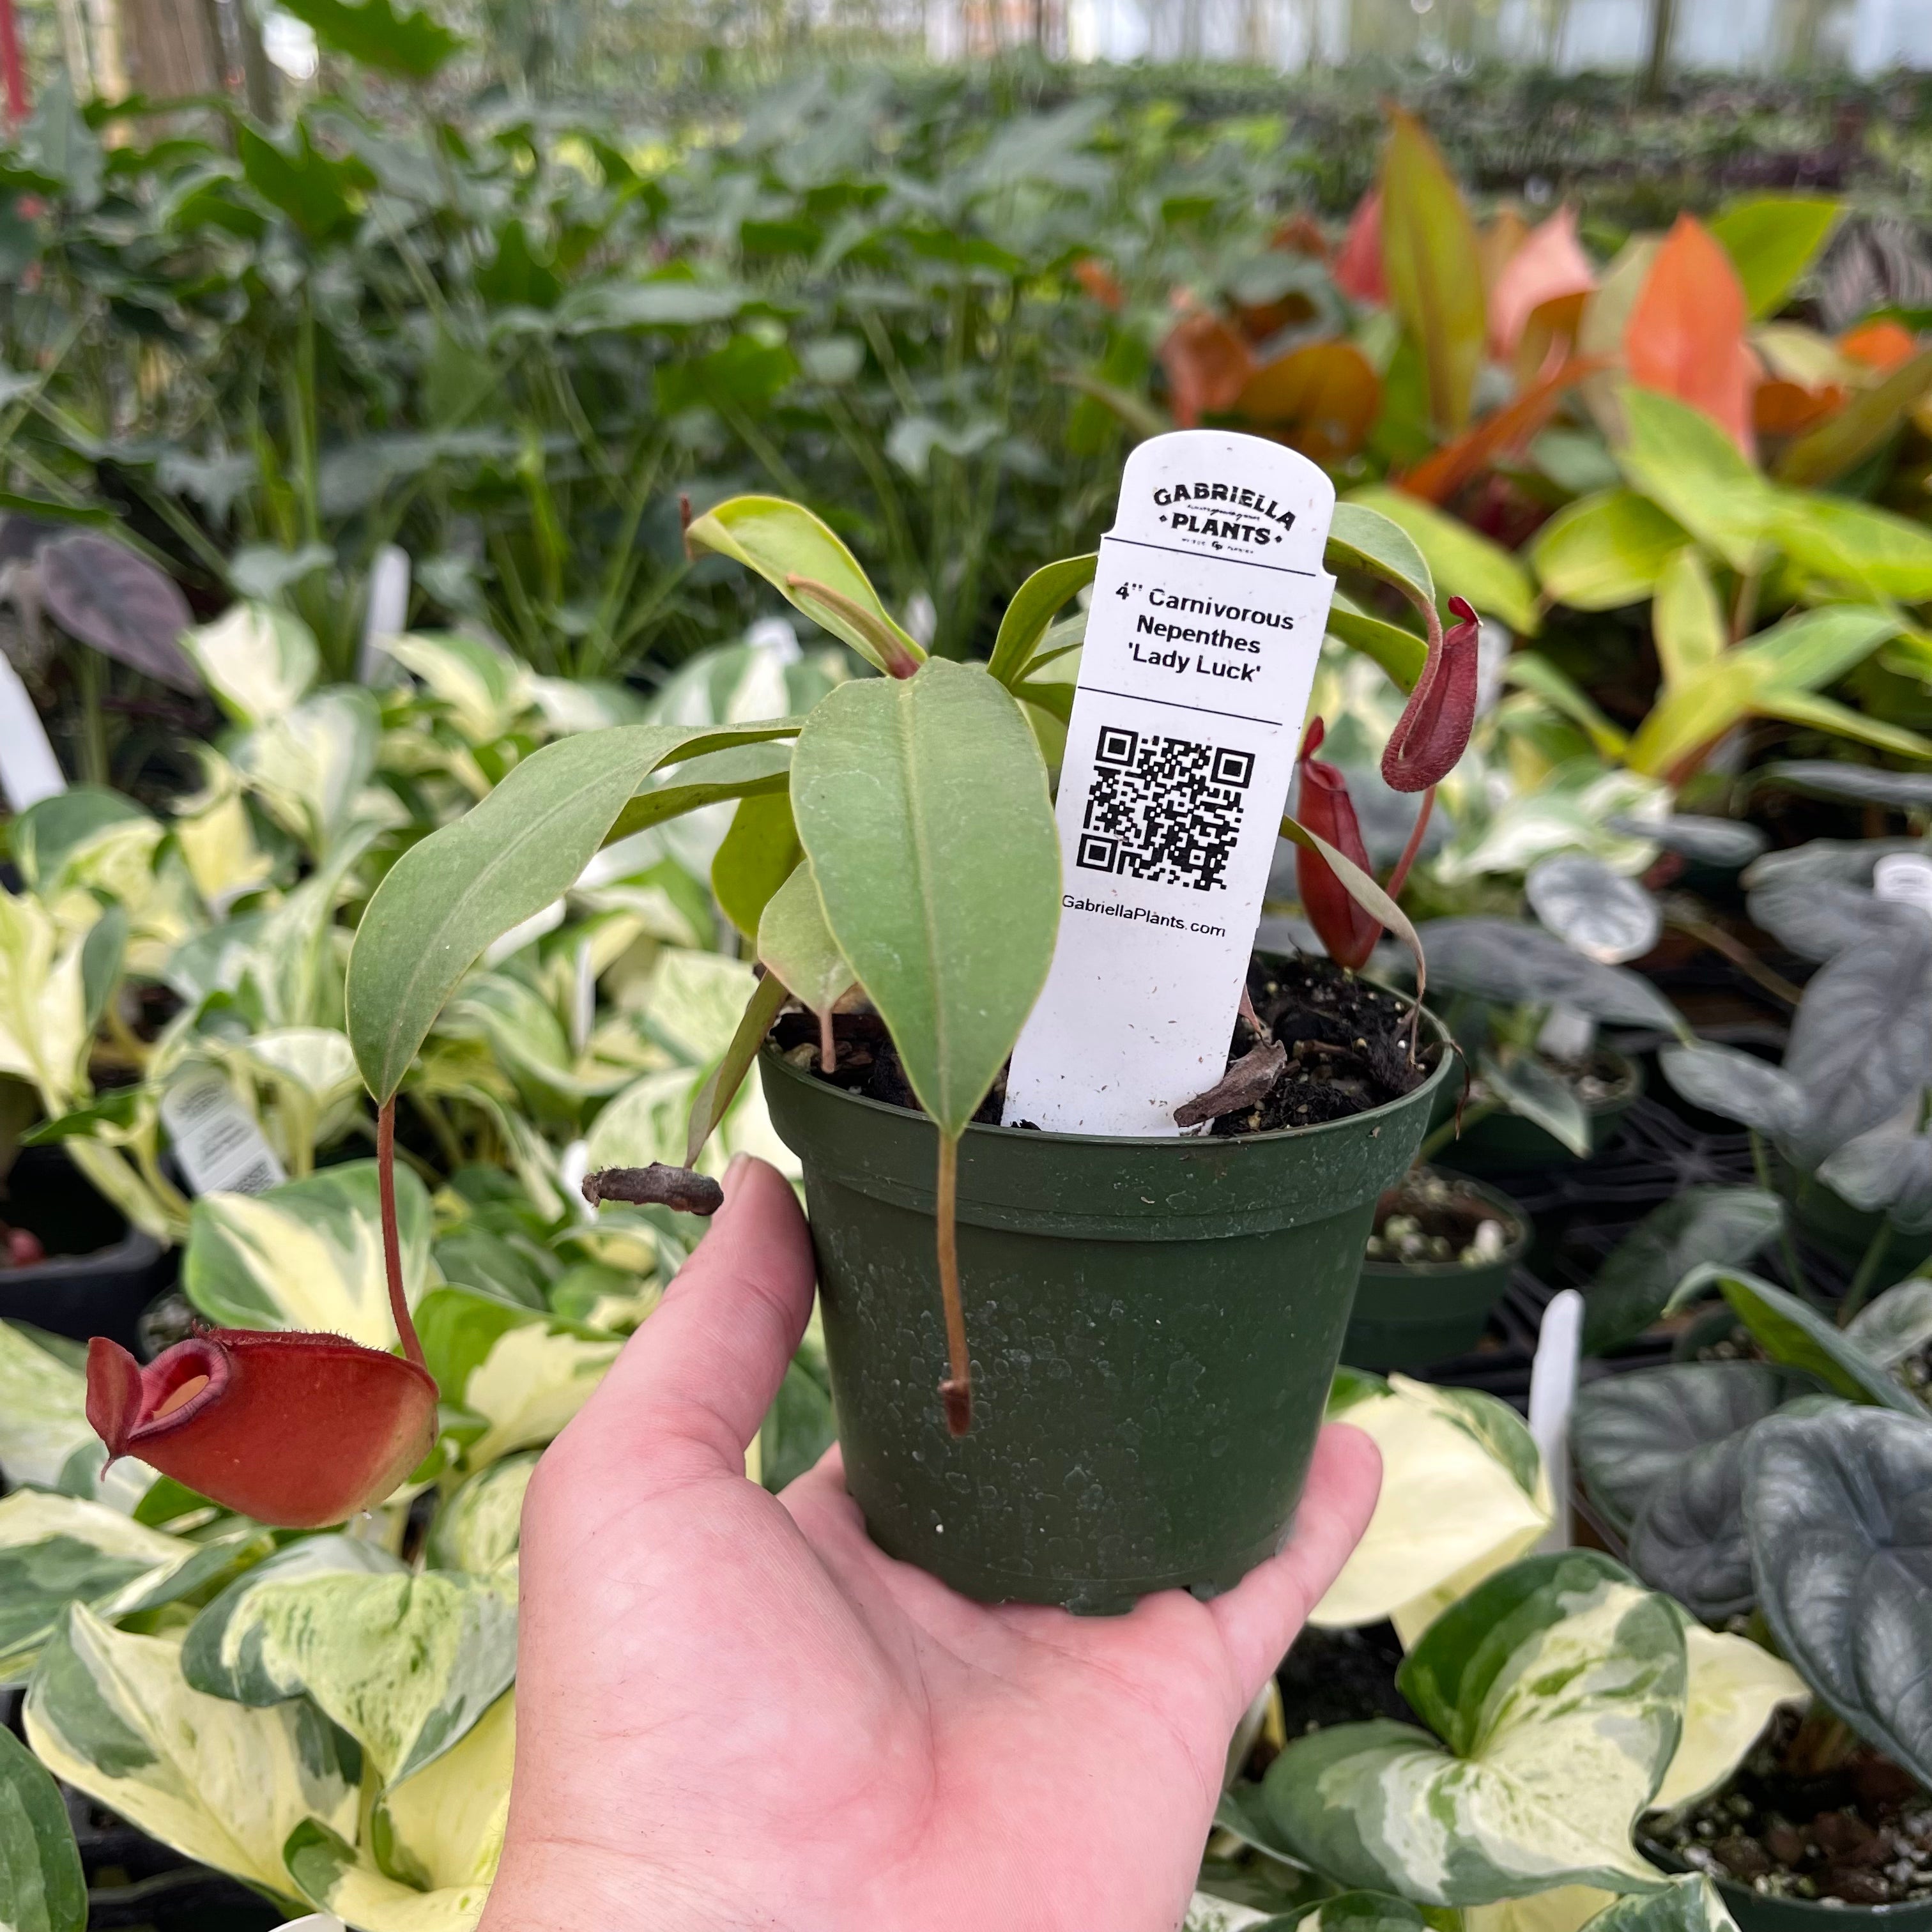 Gabriella Plants Carnivorous 4" Carnivorous Nepenthes 'Lady Luck'